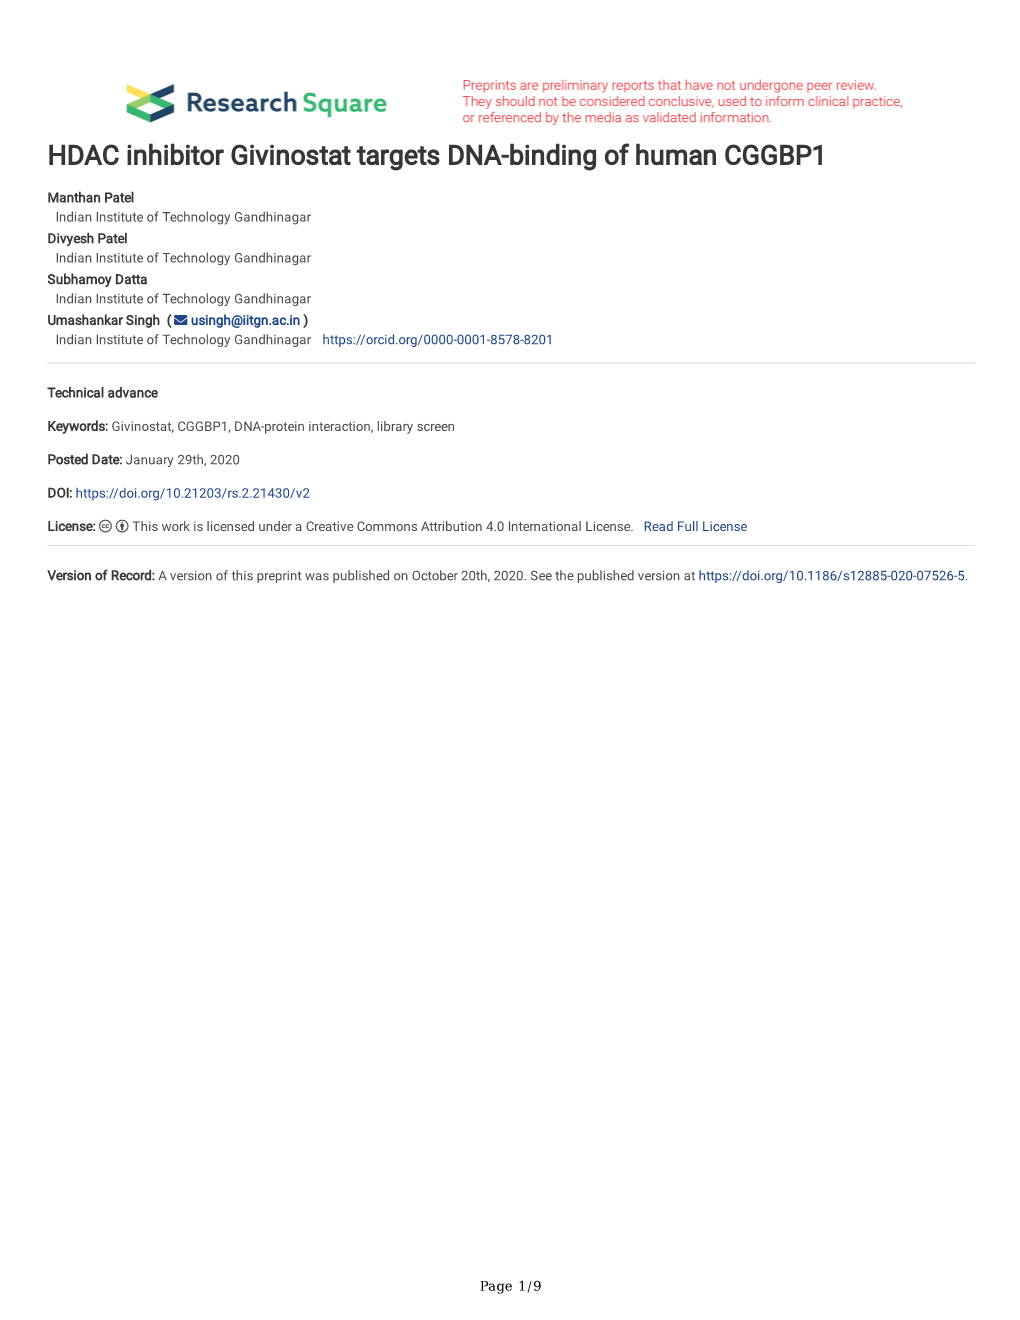 HDAC Inhibitor Givinostat Targets DNA-Binding of Human CGGBP1